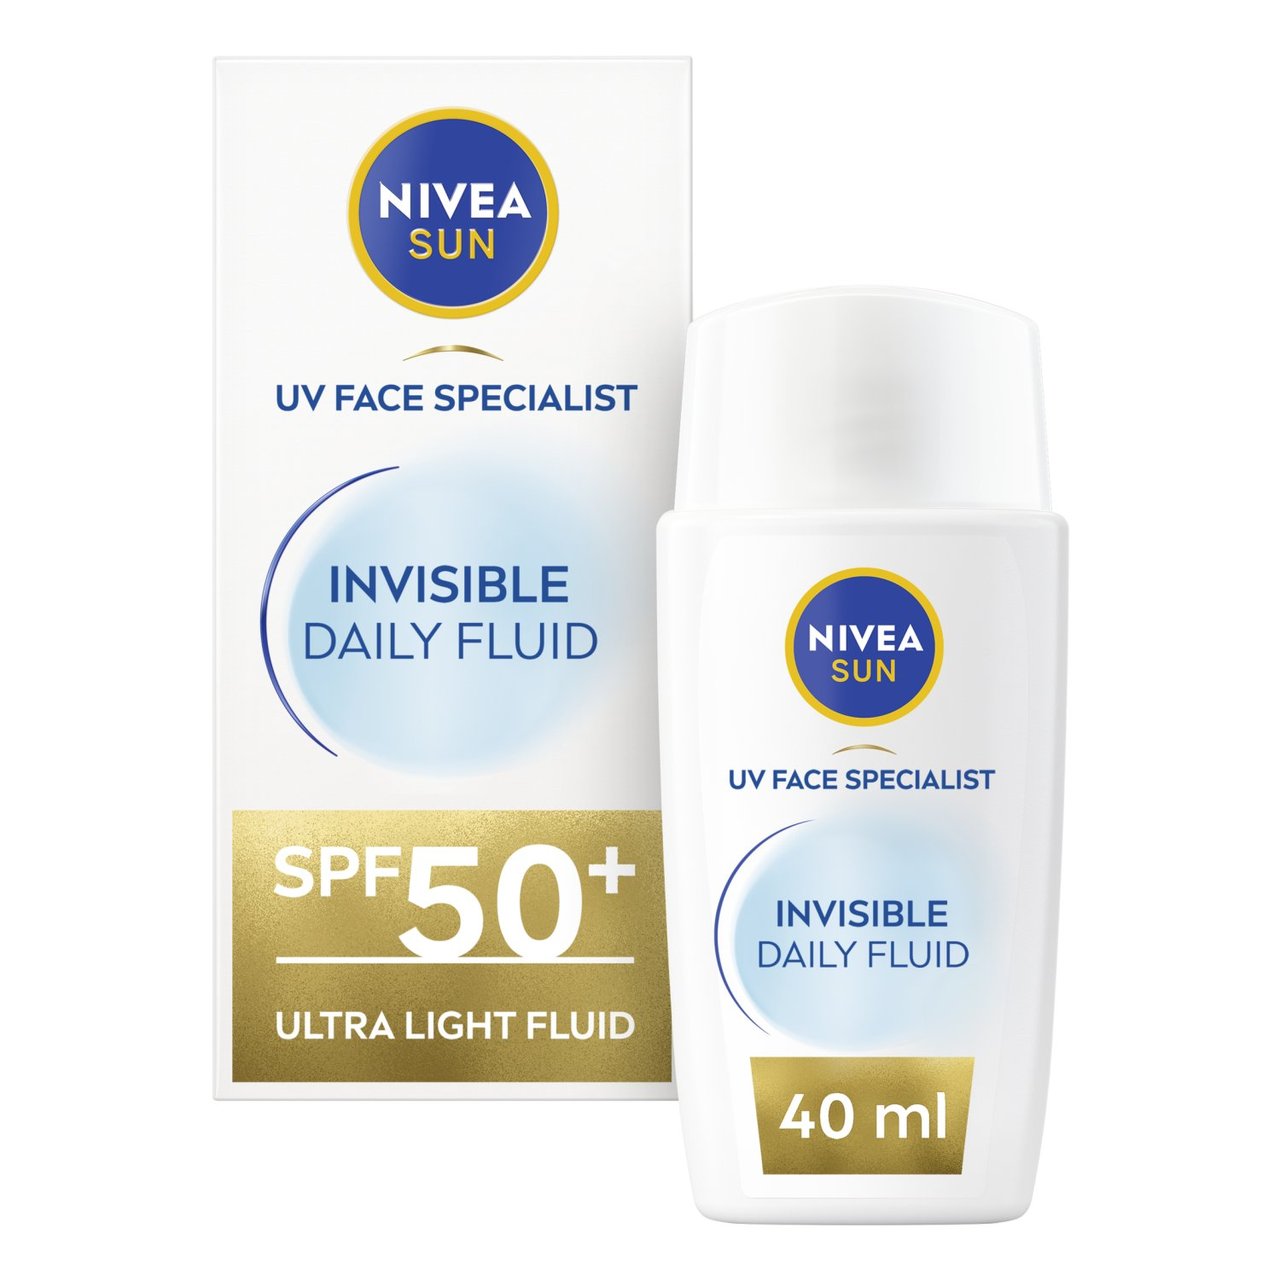 NIVEA SUN UV Face Invisible Daily Fluid SPF 50 Sunscreen